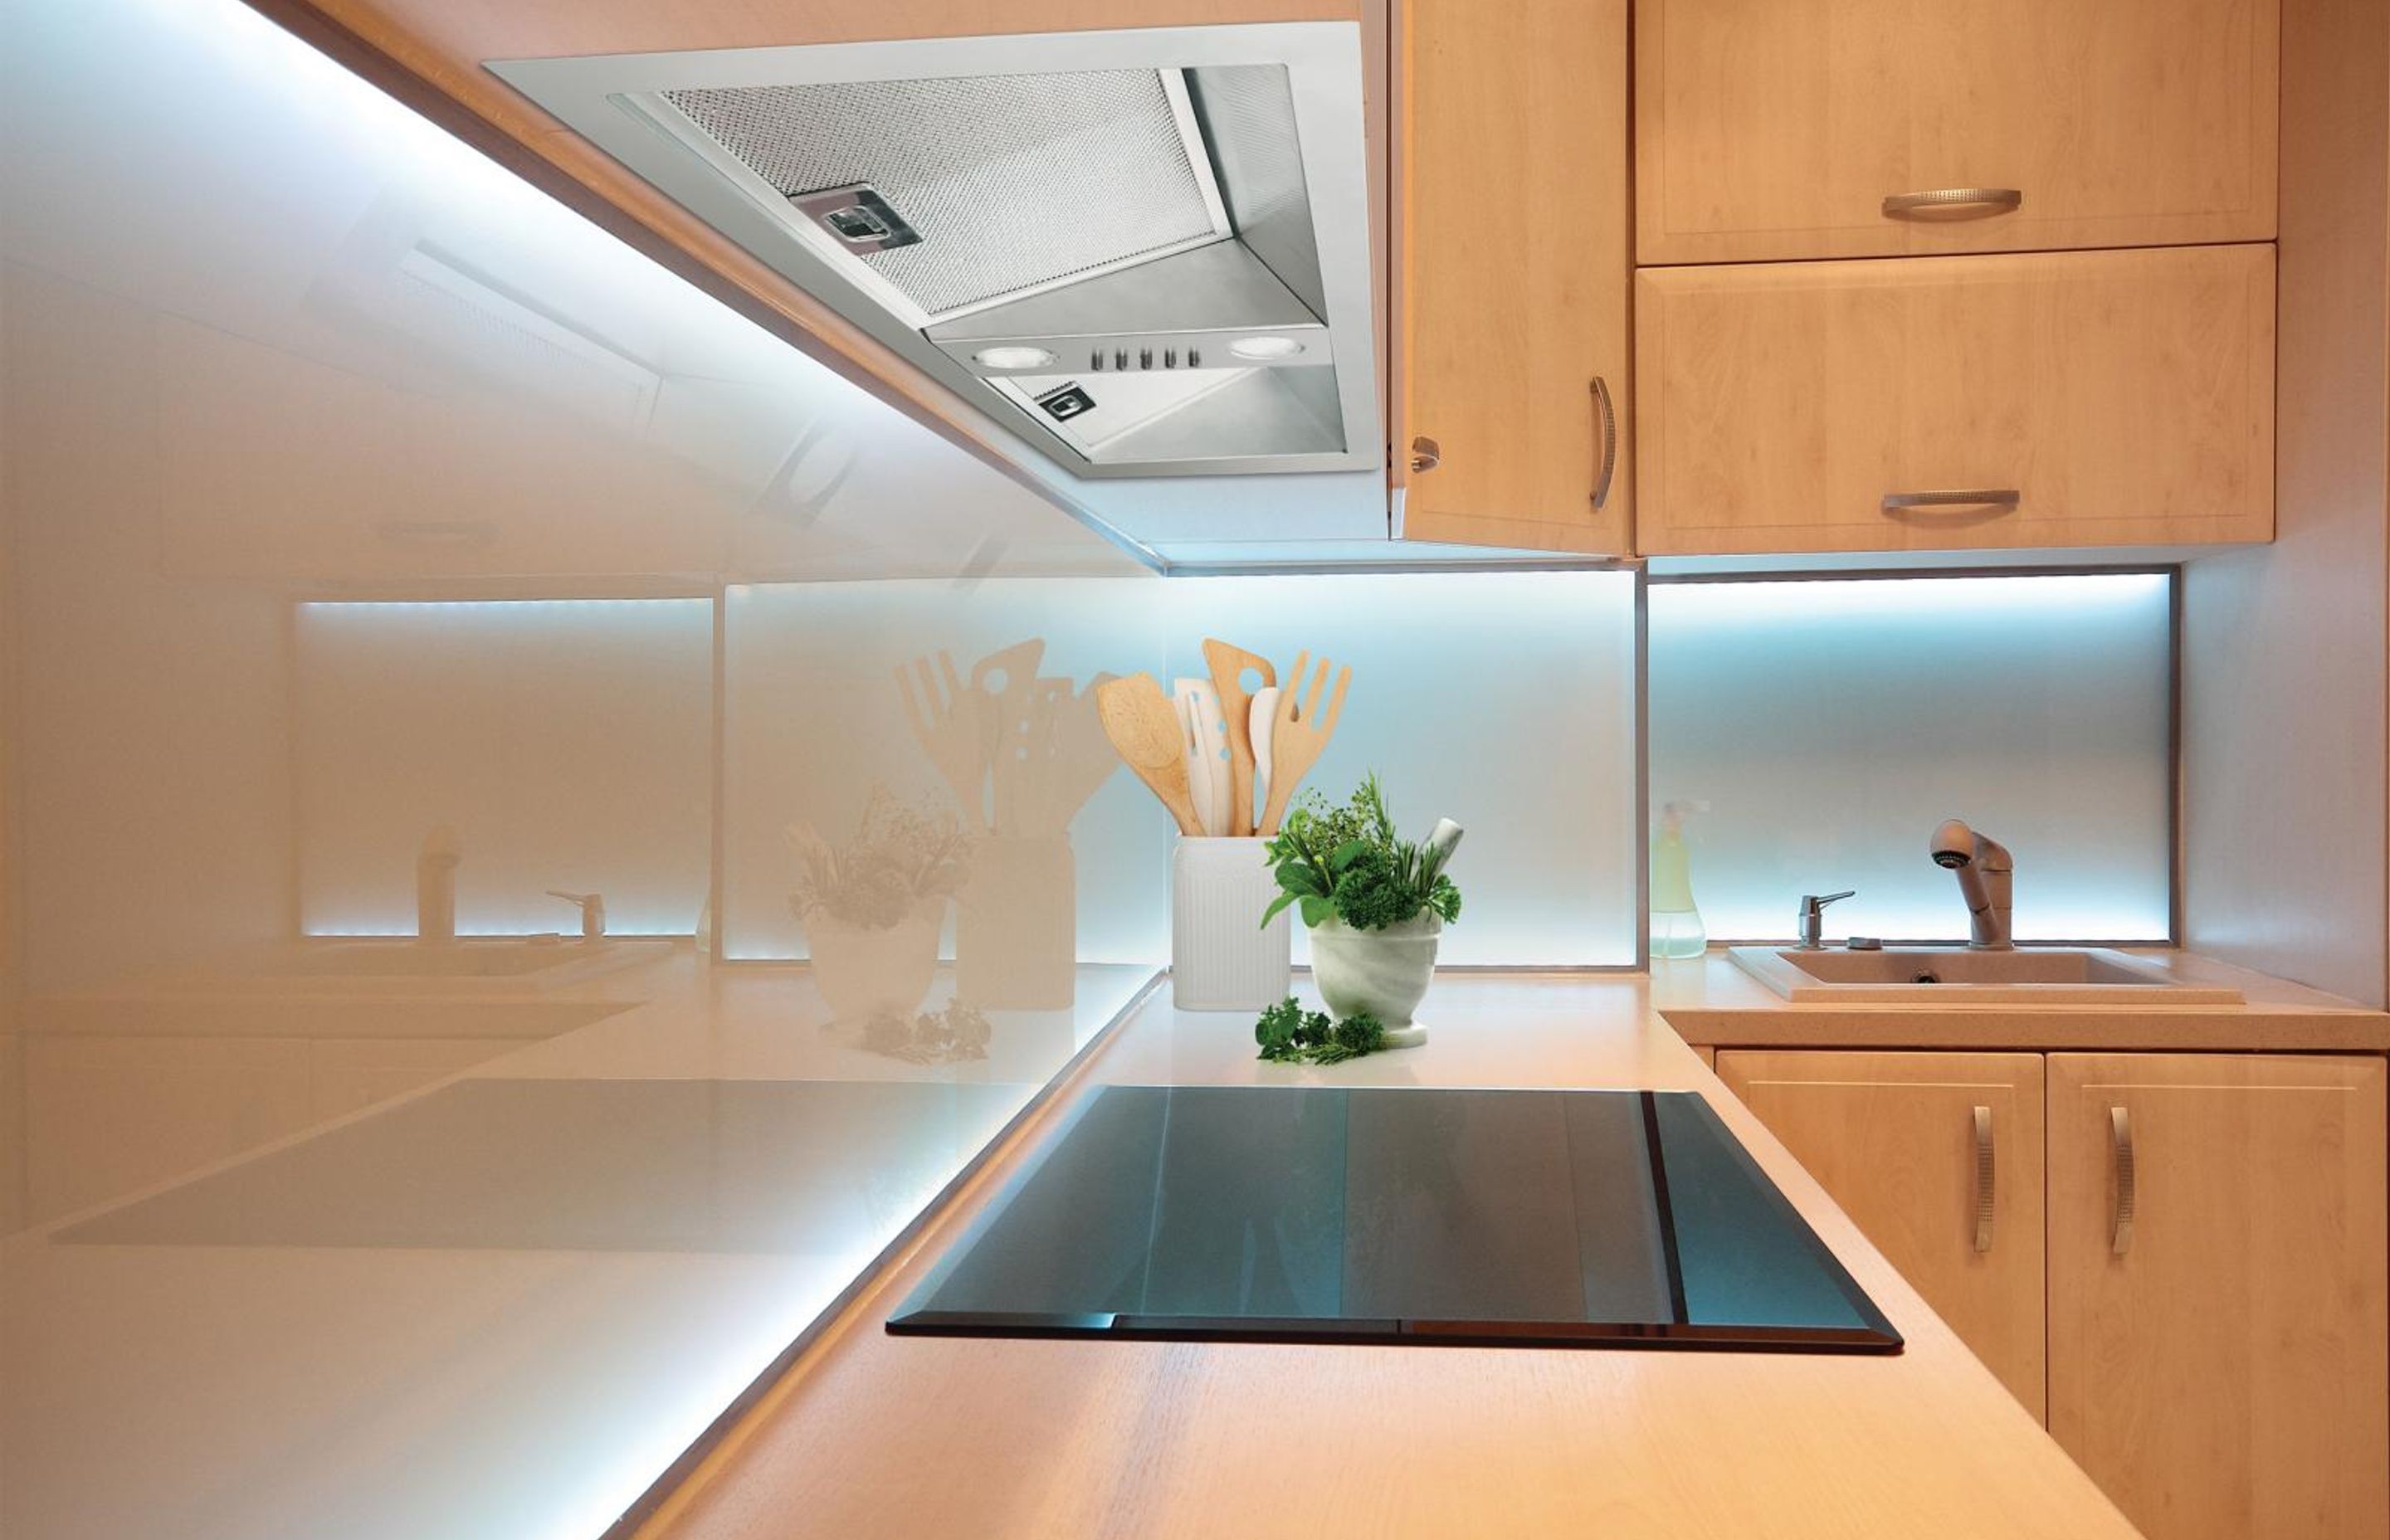 The sleek and modern range of Schweigen undermount rangehoods has been designed to complement any contemporary kitchen.